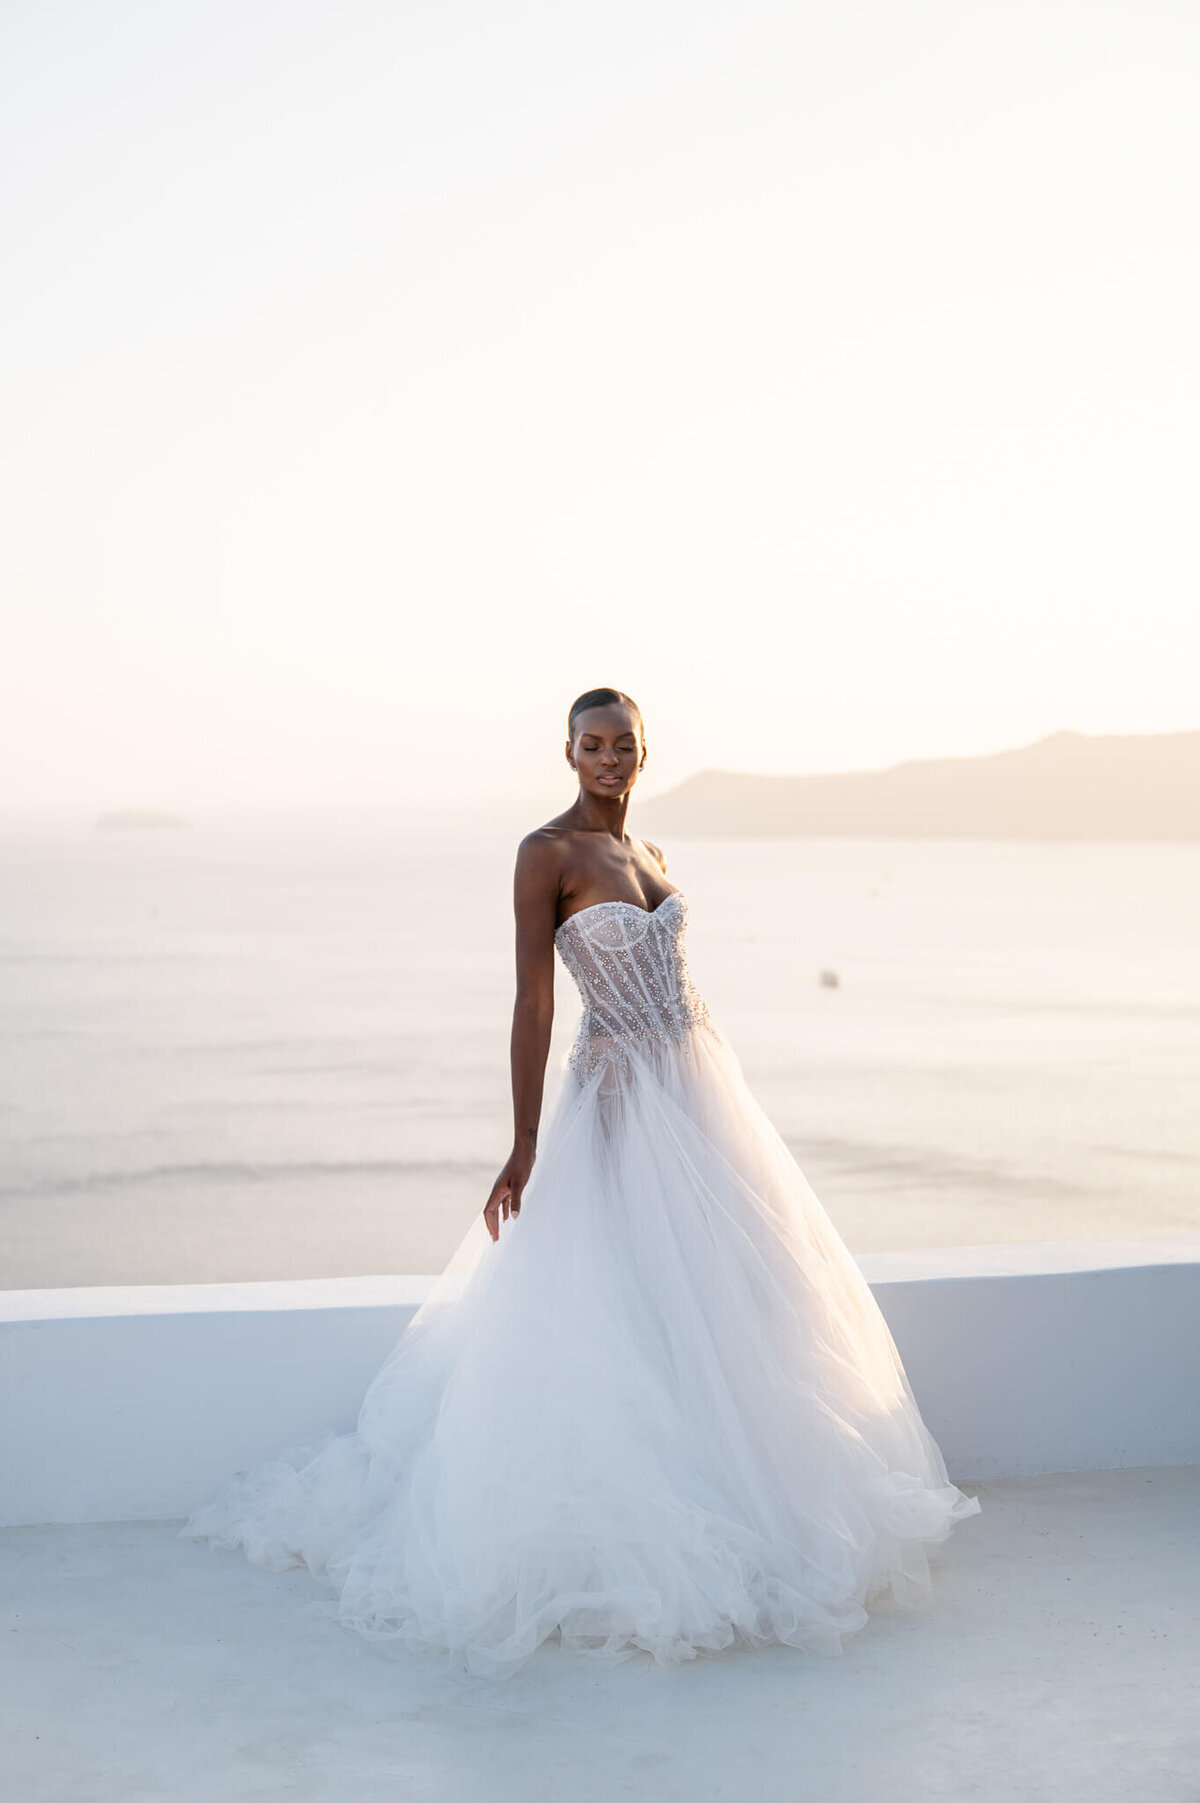 Europe Destination Wedding Photographer - Santorini Greece Wedding Photographer - Chloe Bolam -1545